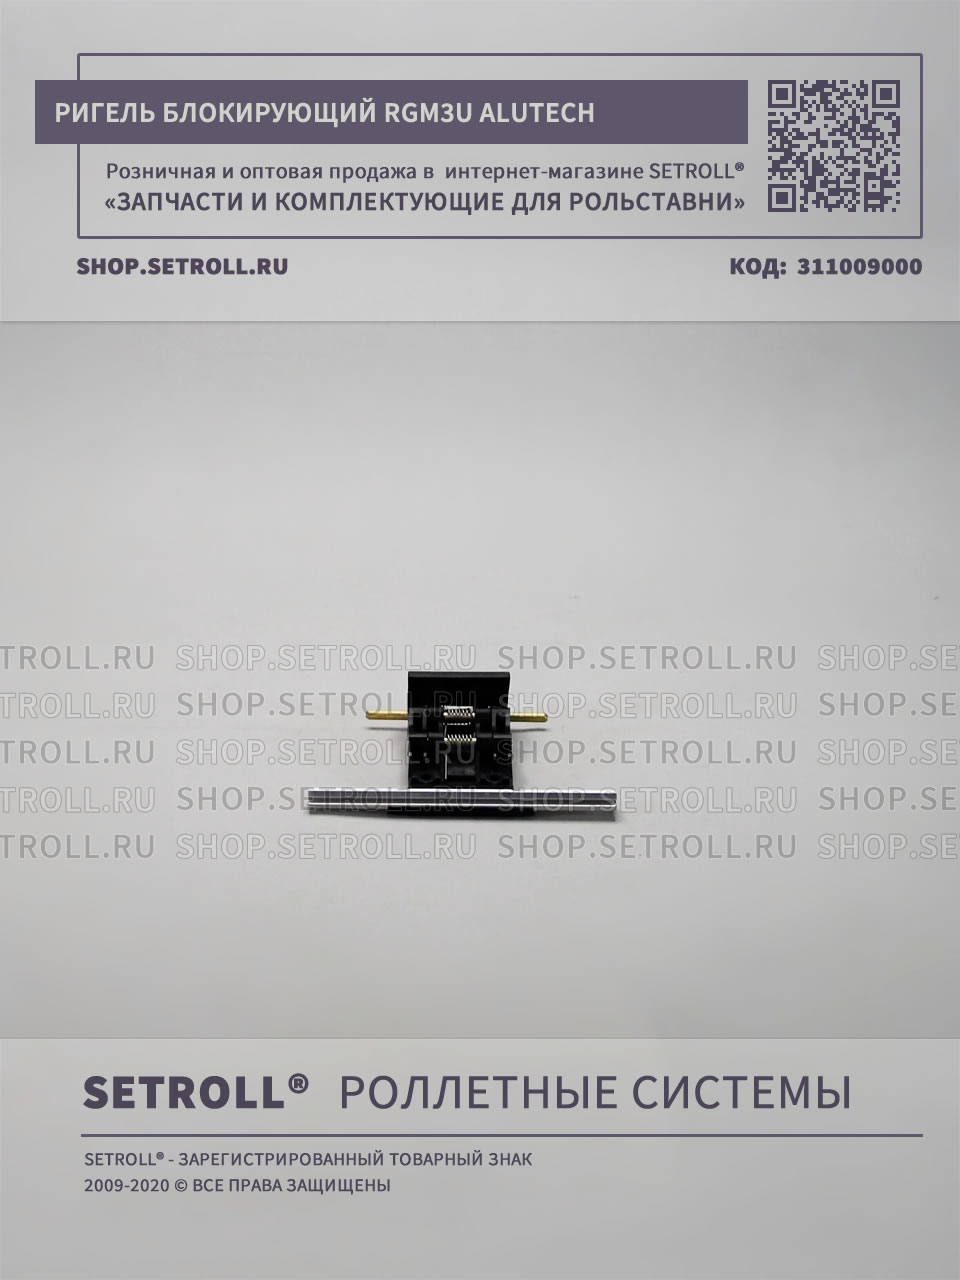 rgm3u-alutekh-face-shop.setroll.ru